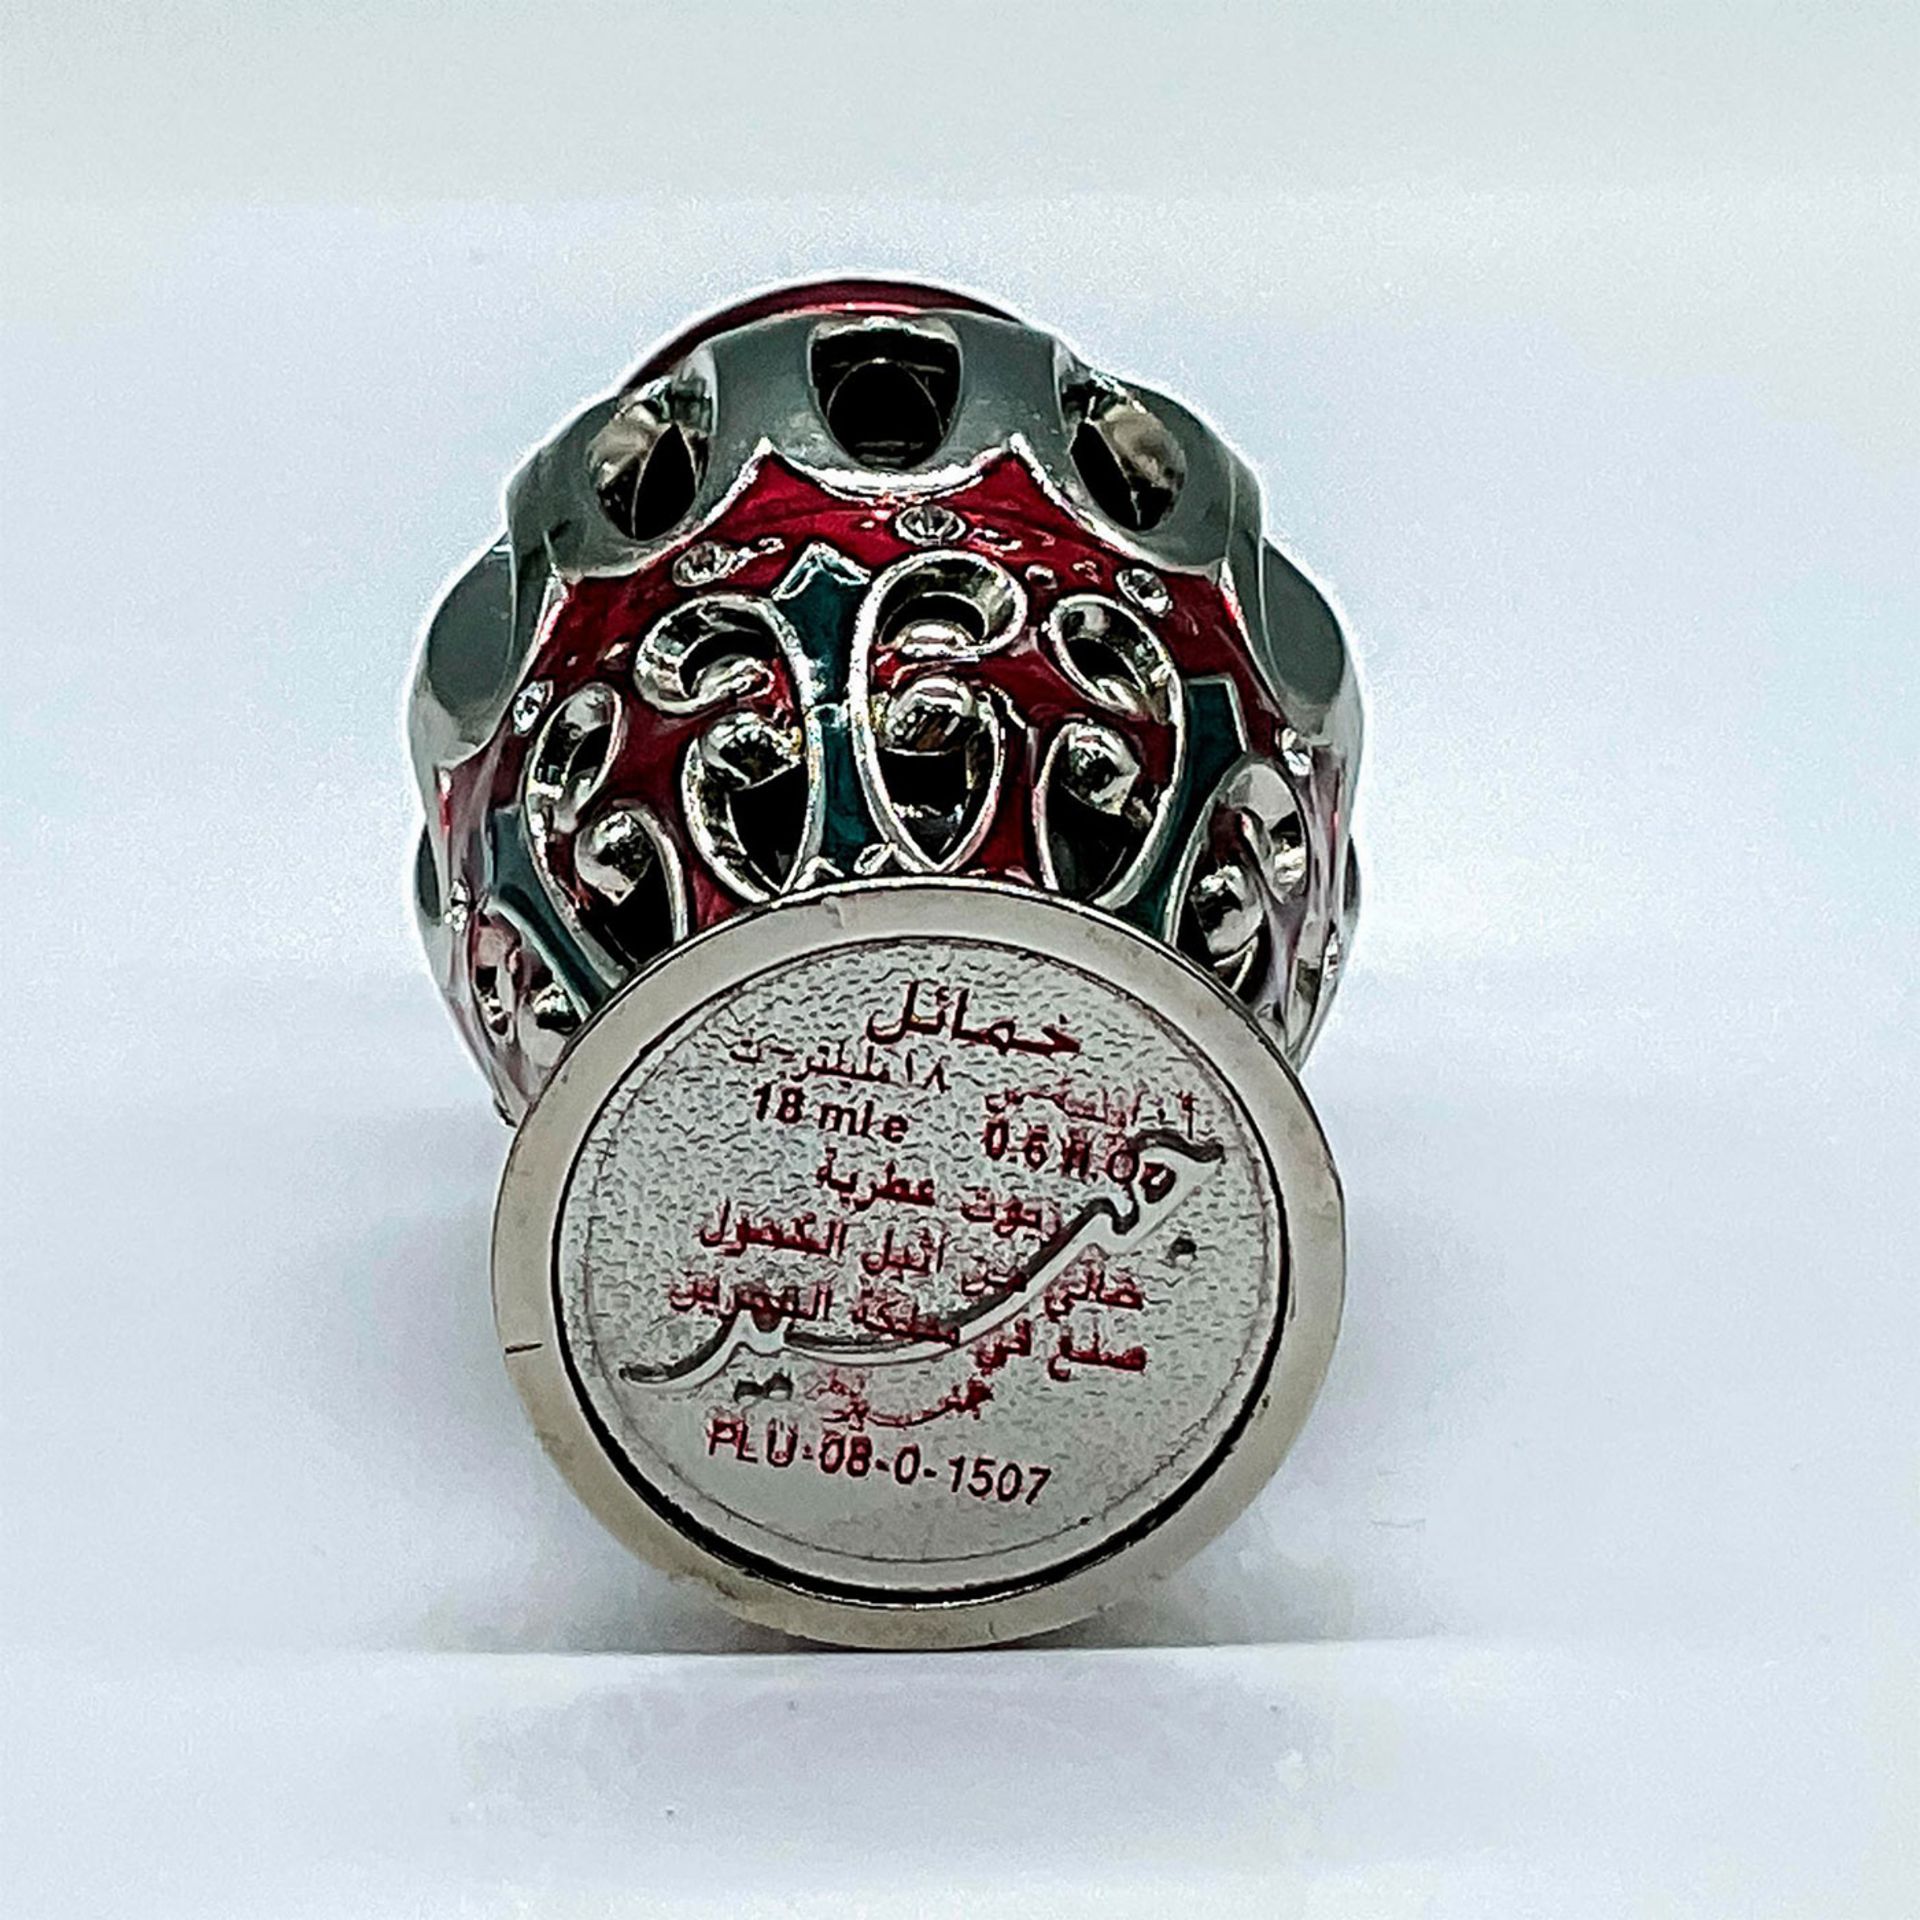 Vintage Middle Eastern Enamel Perfume Bottle with Stopper - Image 2 of 2